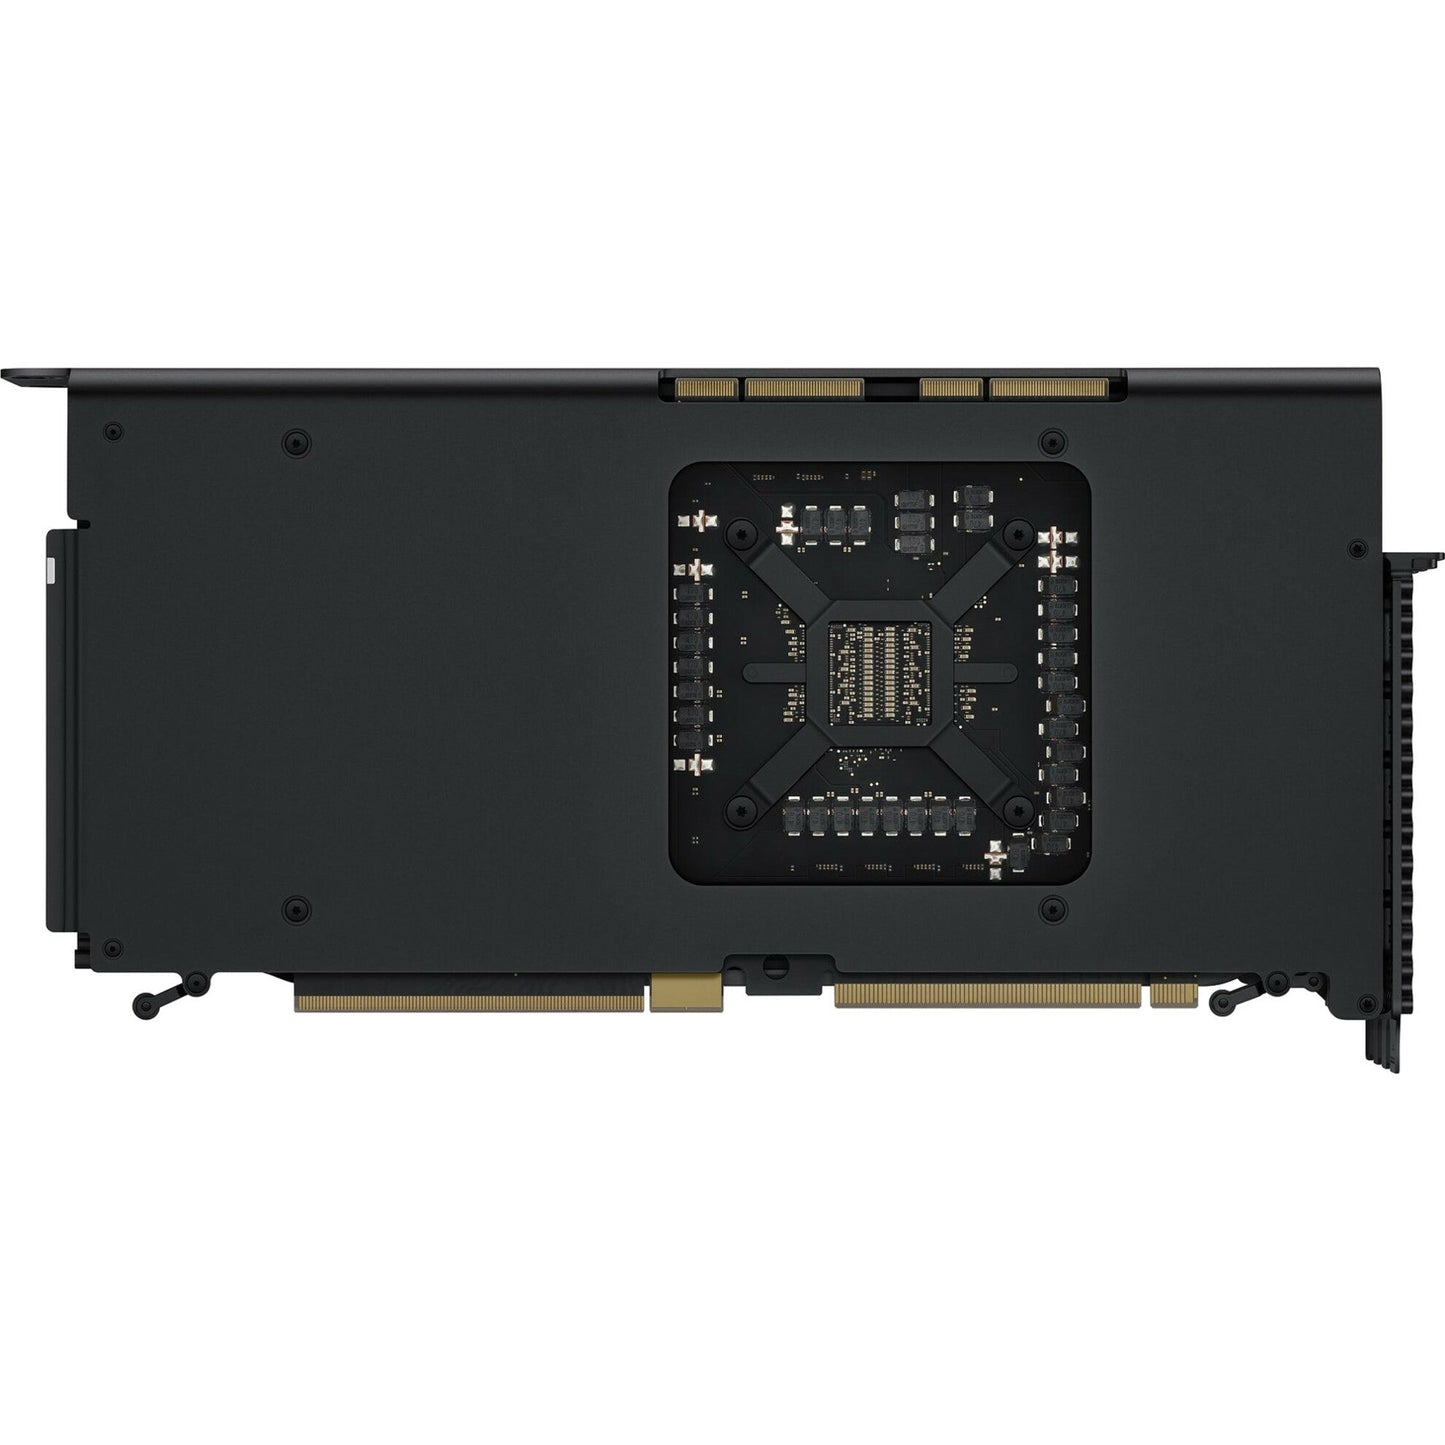 Apple AMD Radeon Pro Vega II Graphic Card - 32 GB HBM2